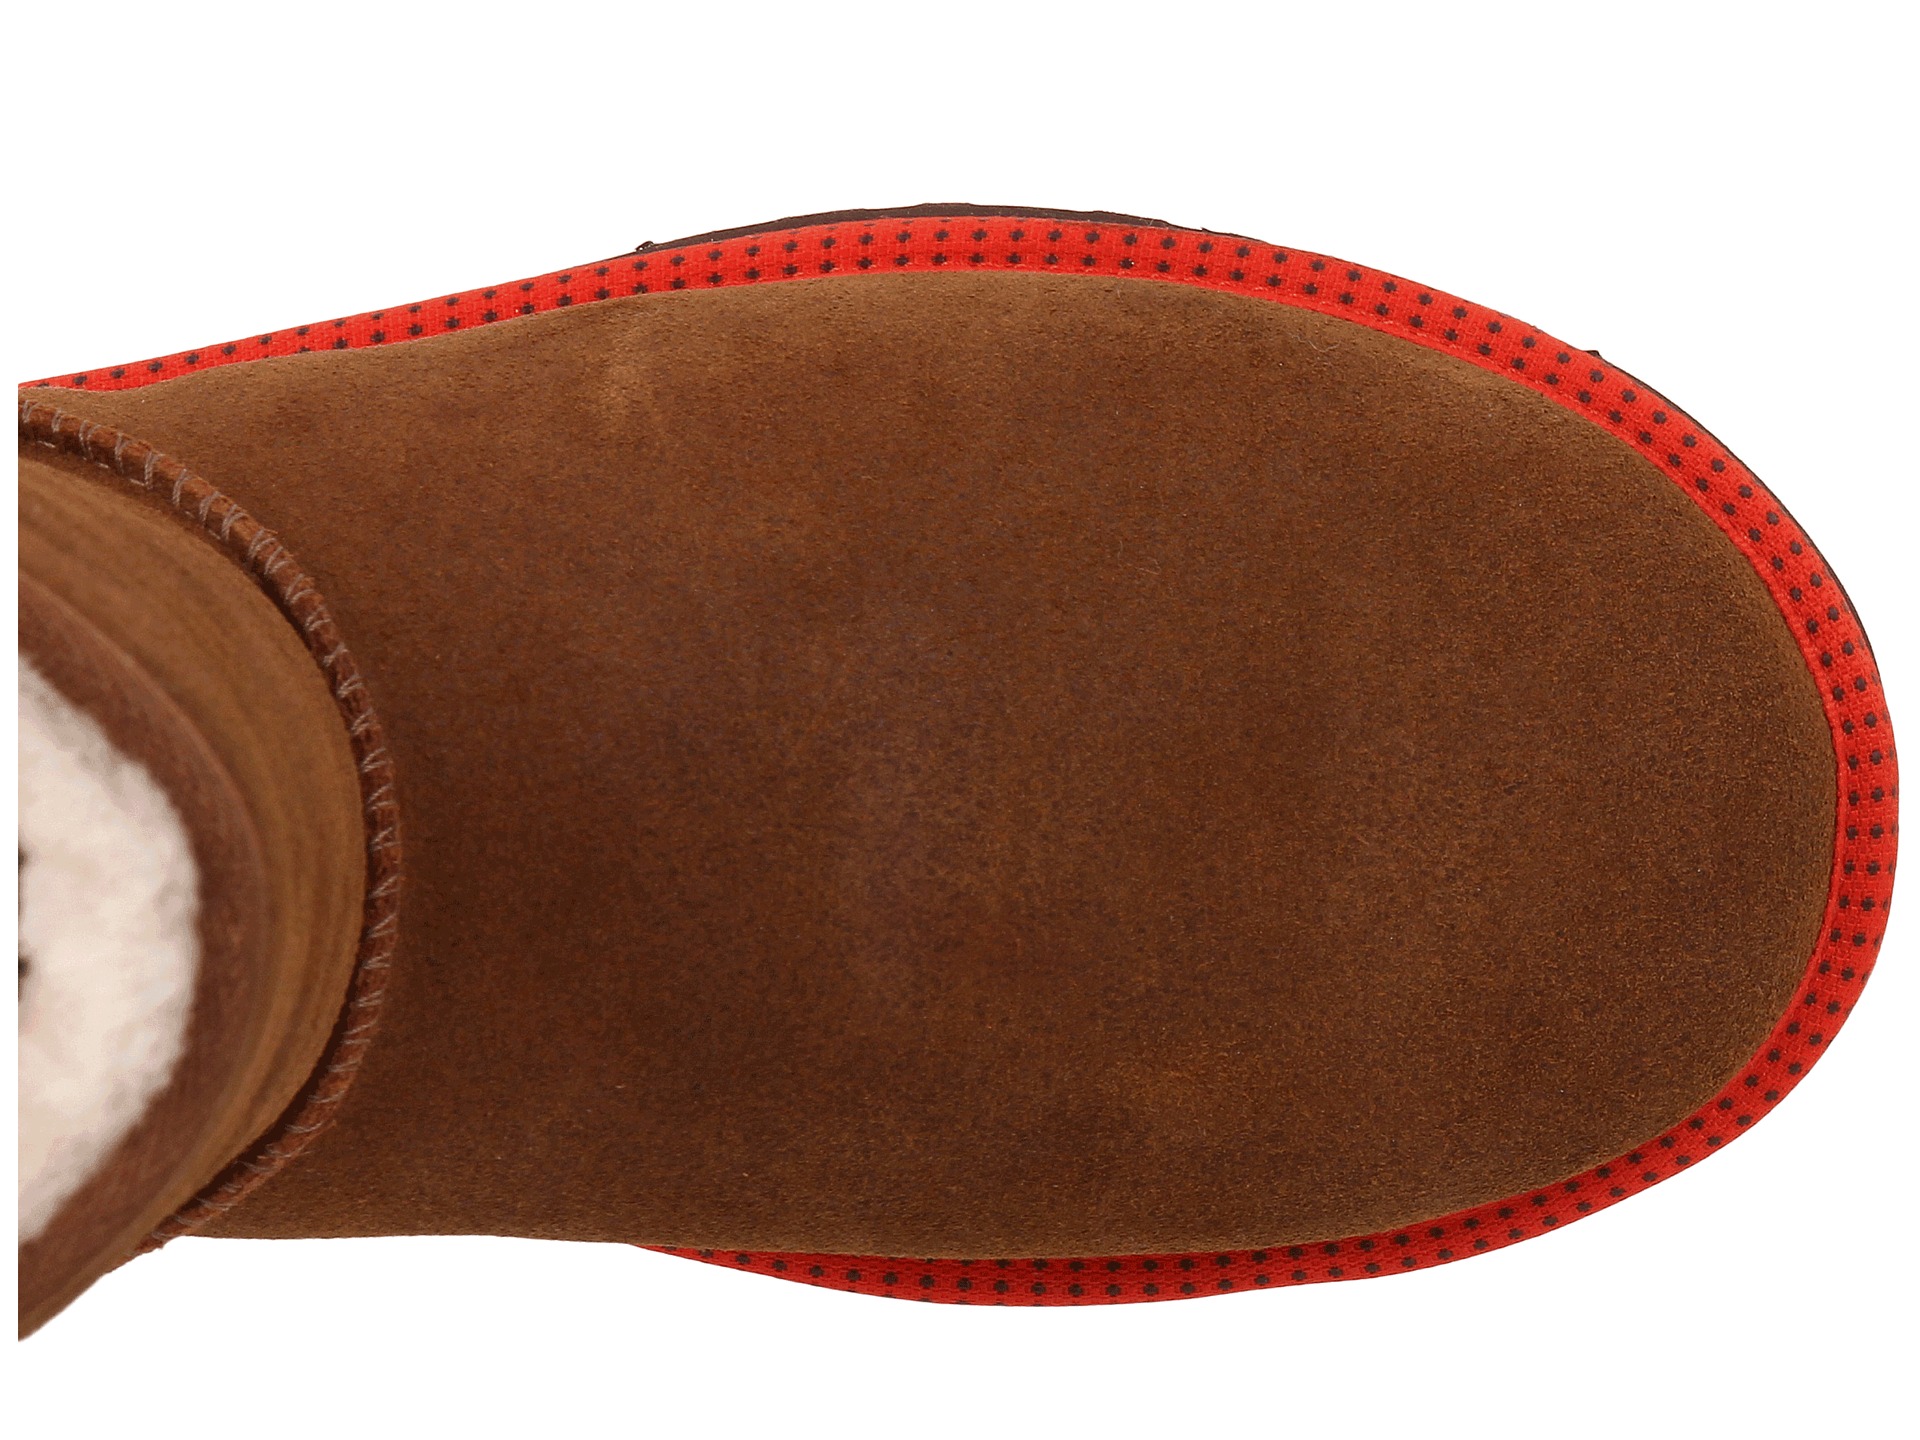 UGG Classic Short Leather Chestnut Leather/Sheepskin - Zappos.com Free ...